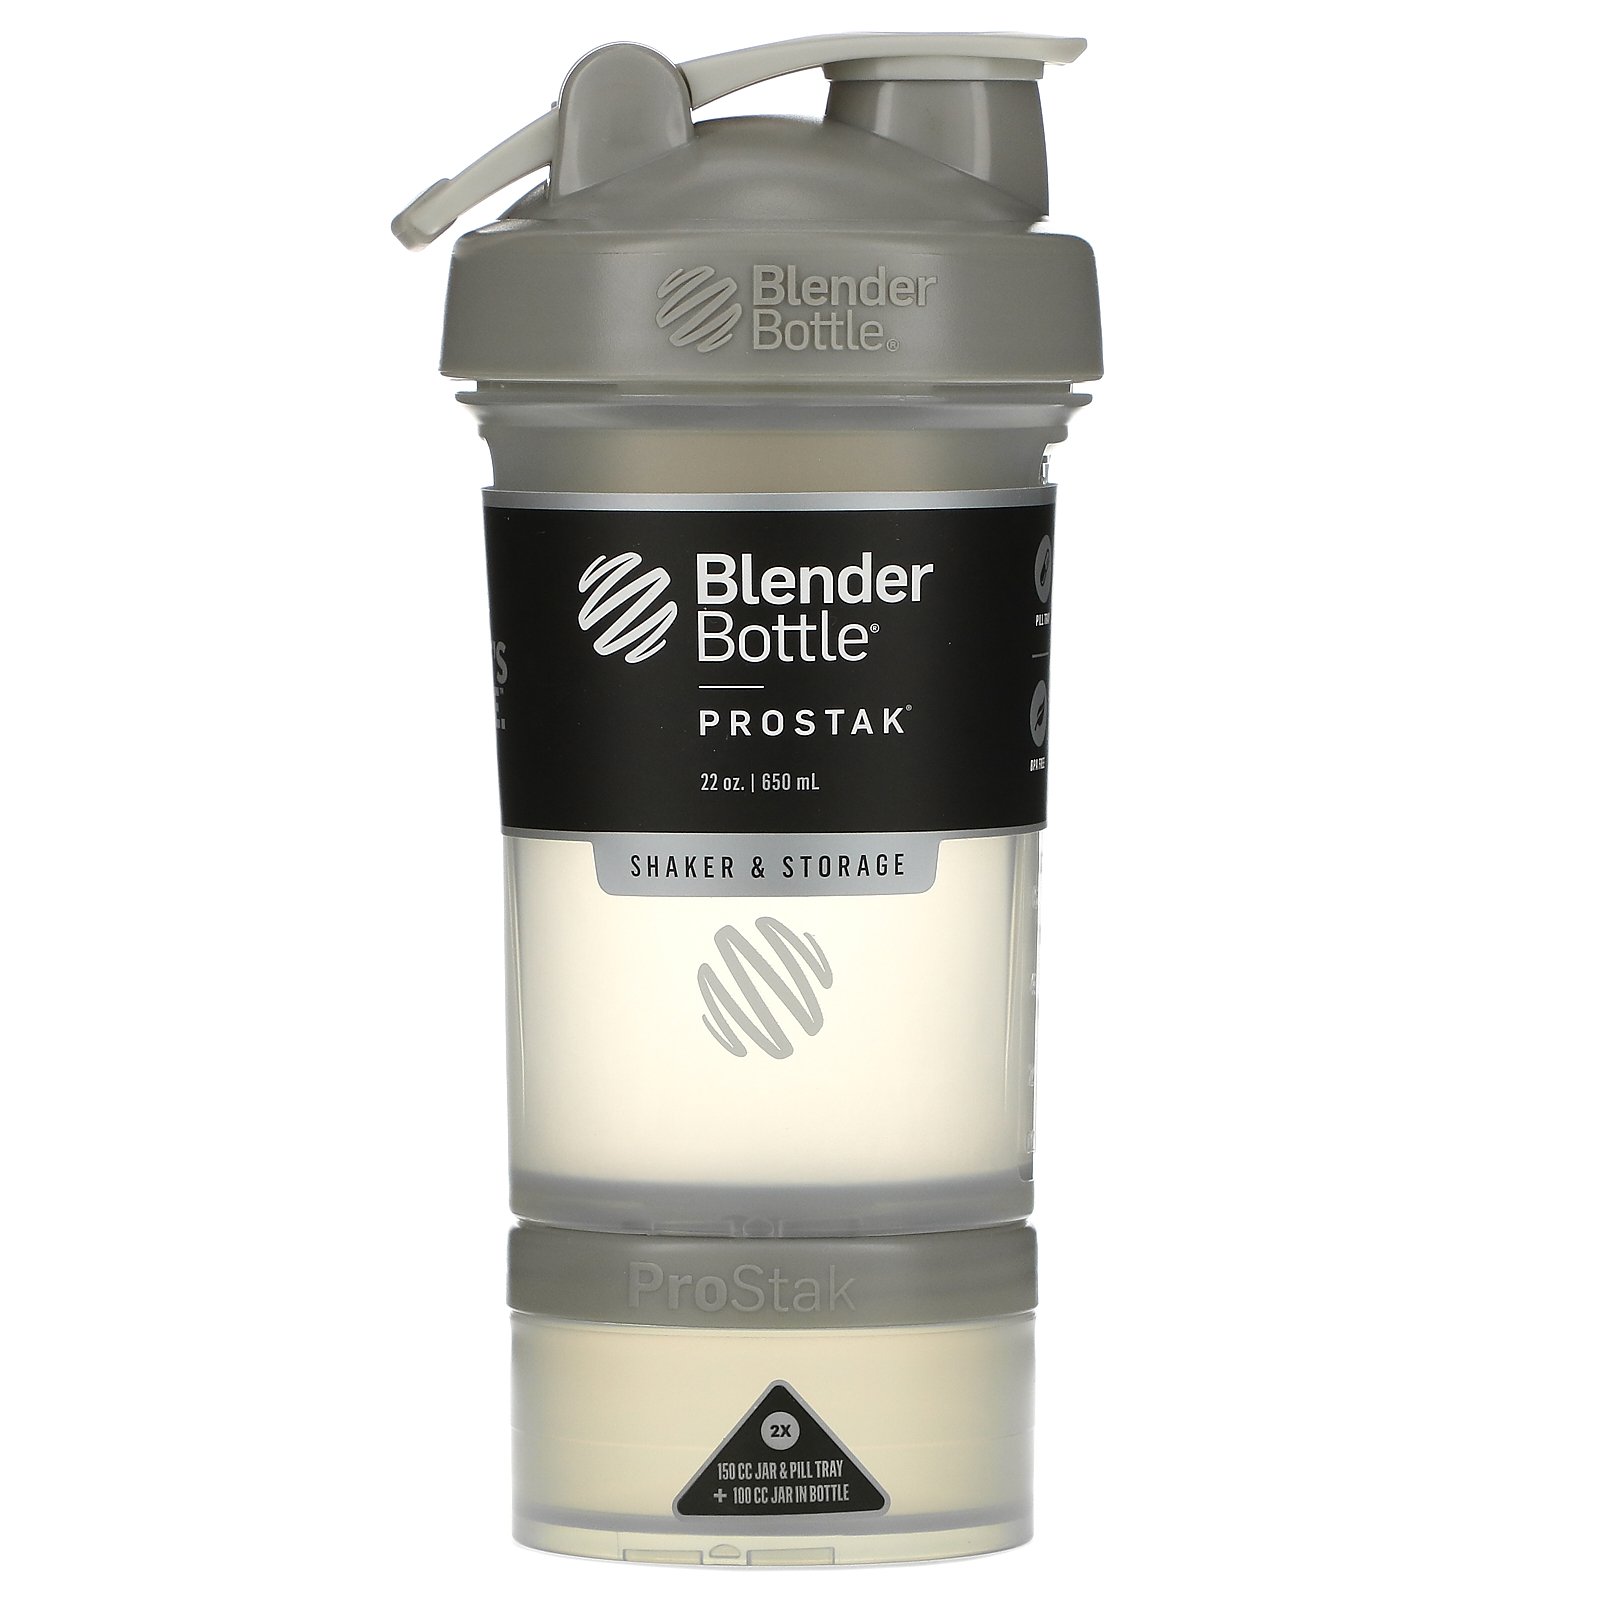 Blender Bottle, ブレンダーボトル、プロスタック、ぺブルグレー、22 oz